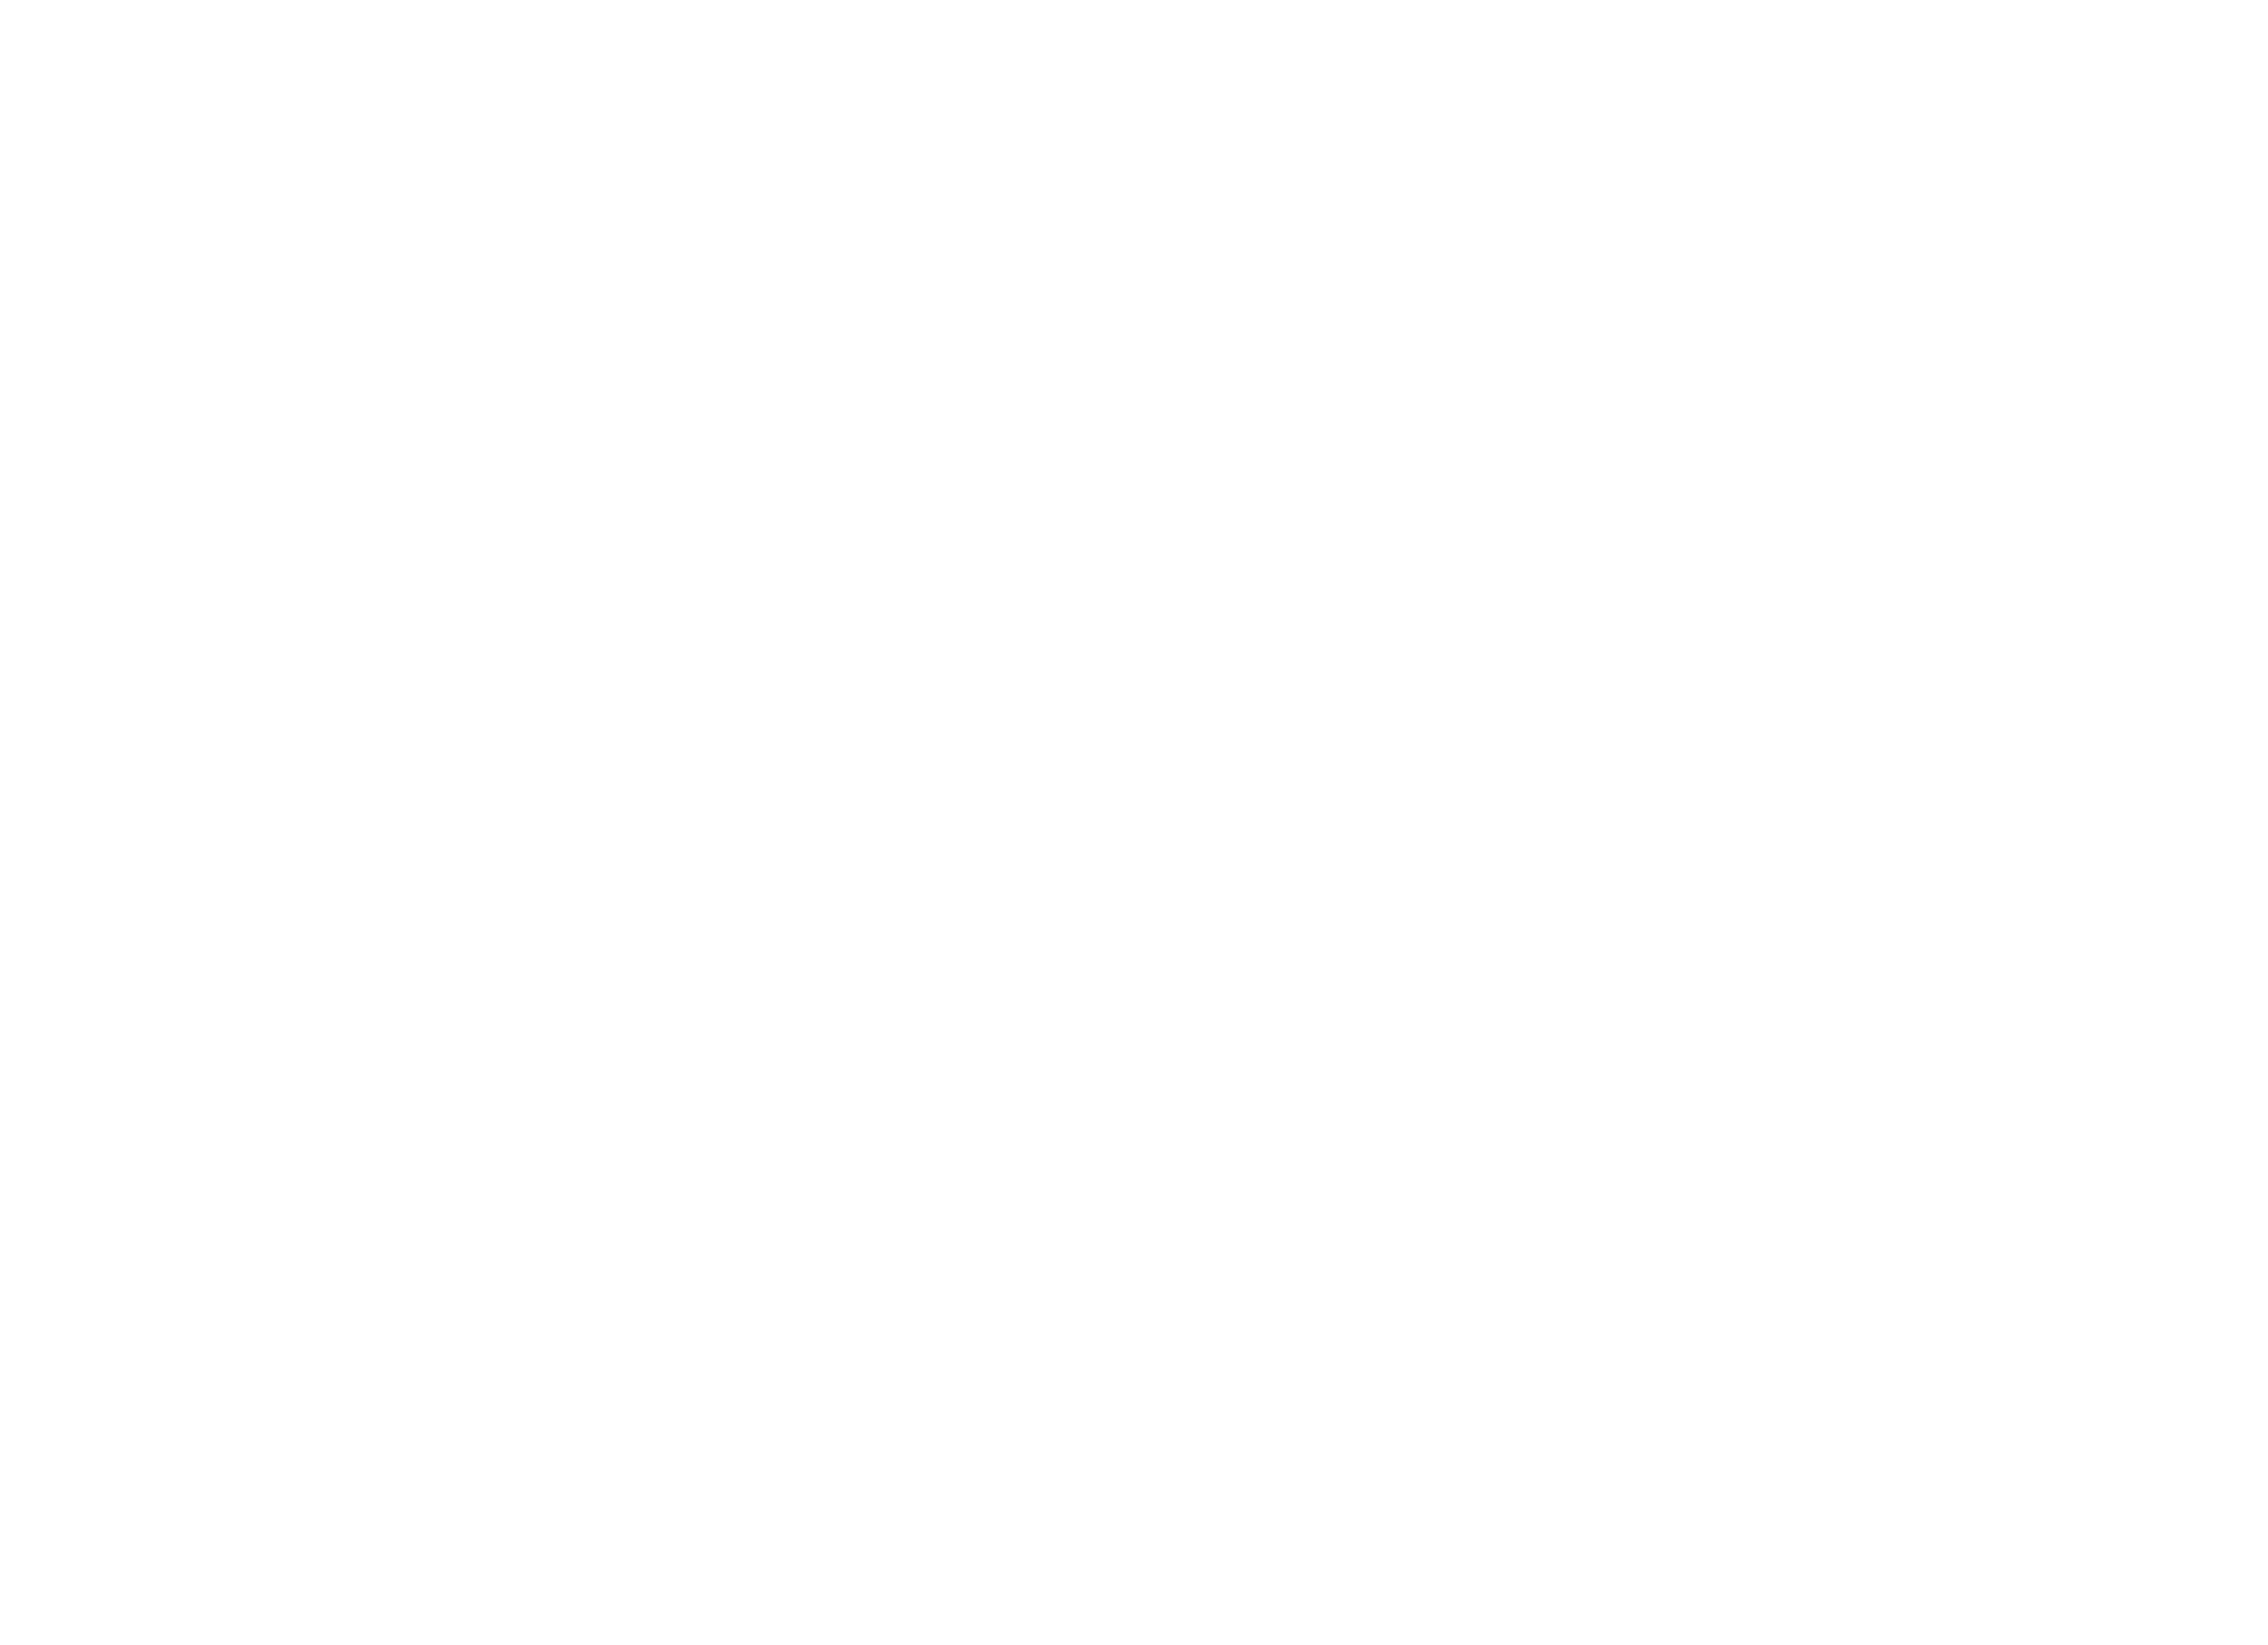 Tavakoli & Associates